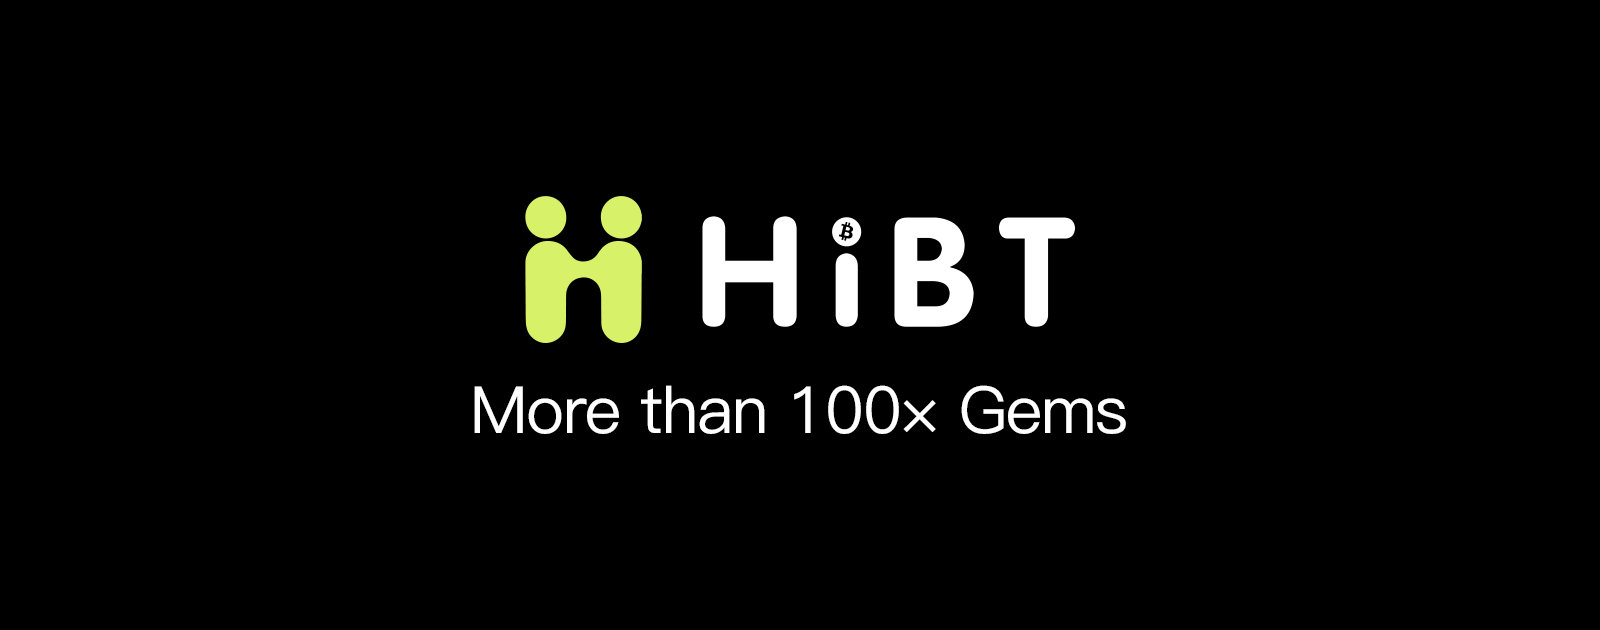 www.hibt.com